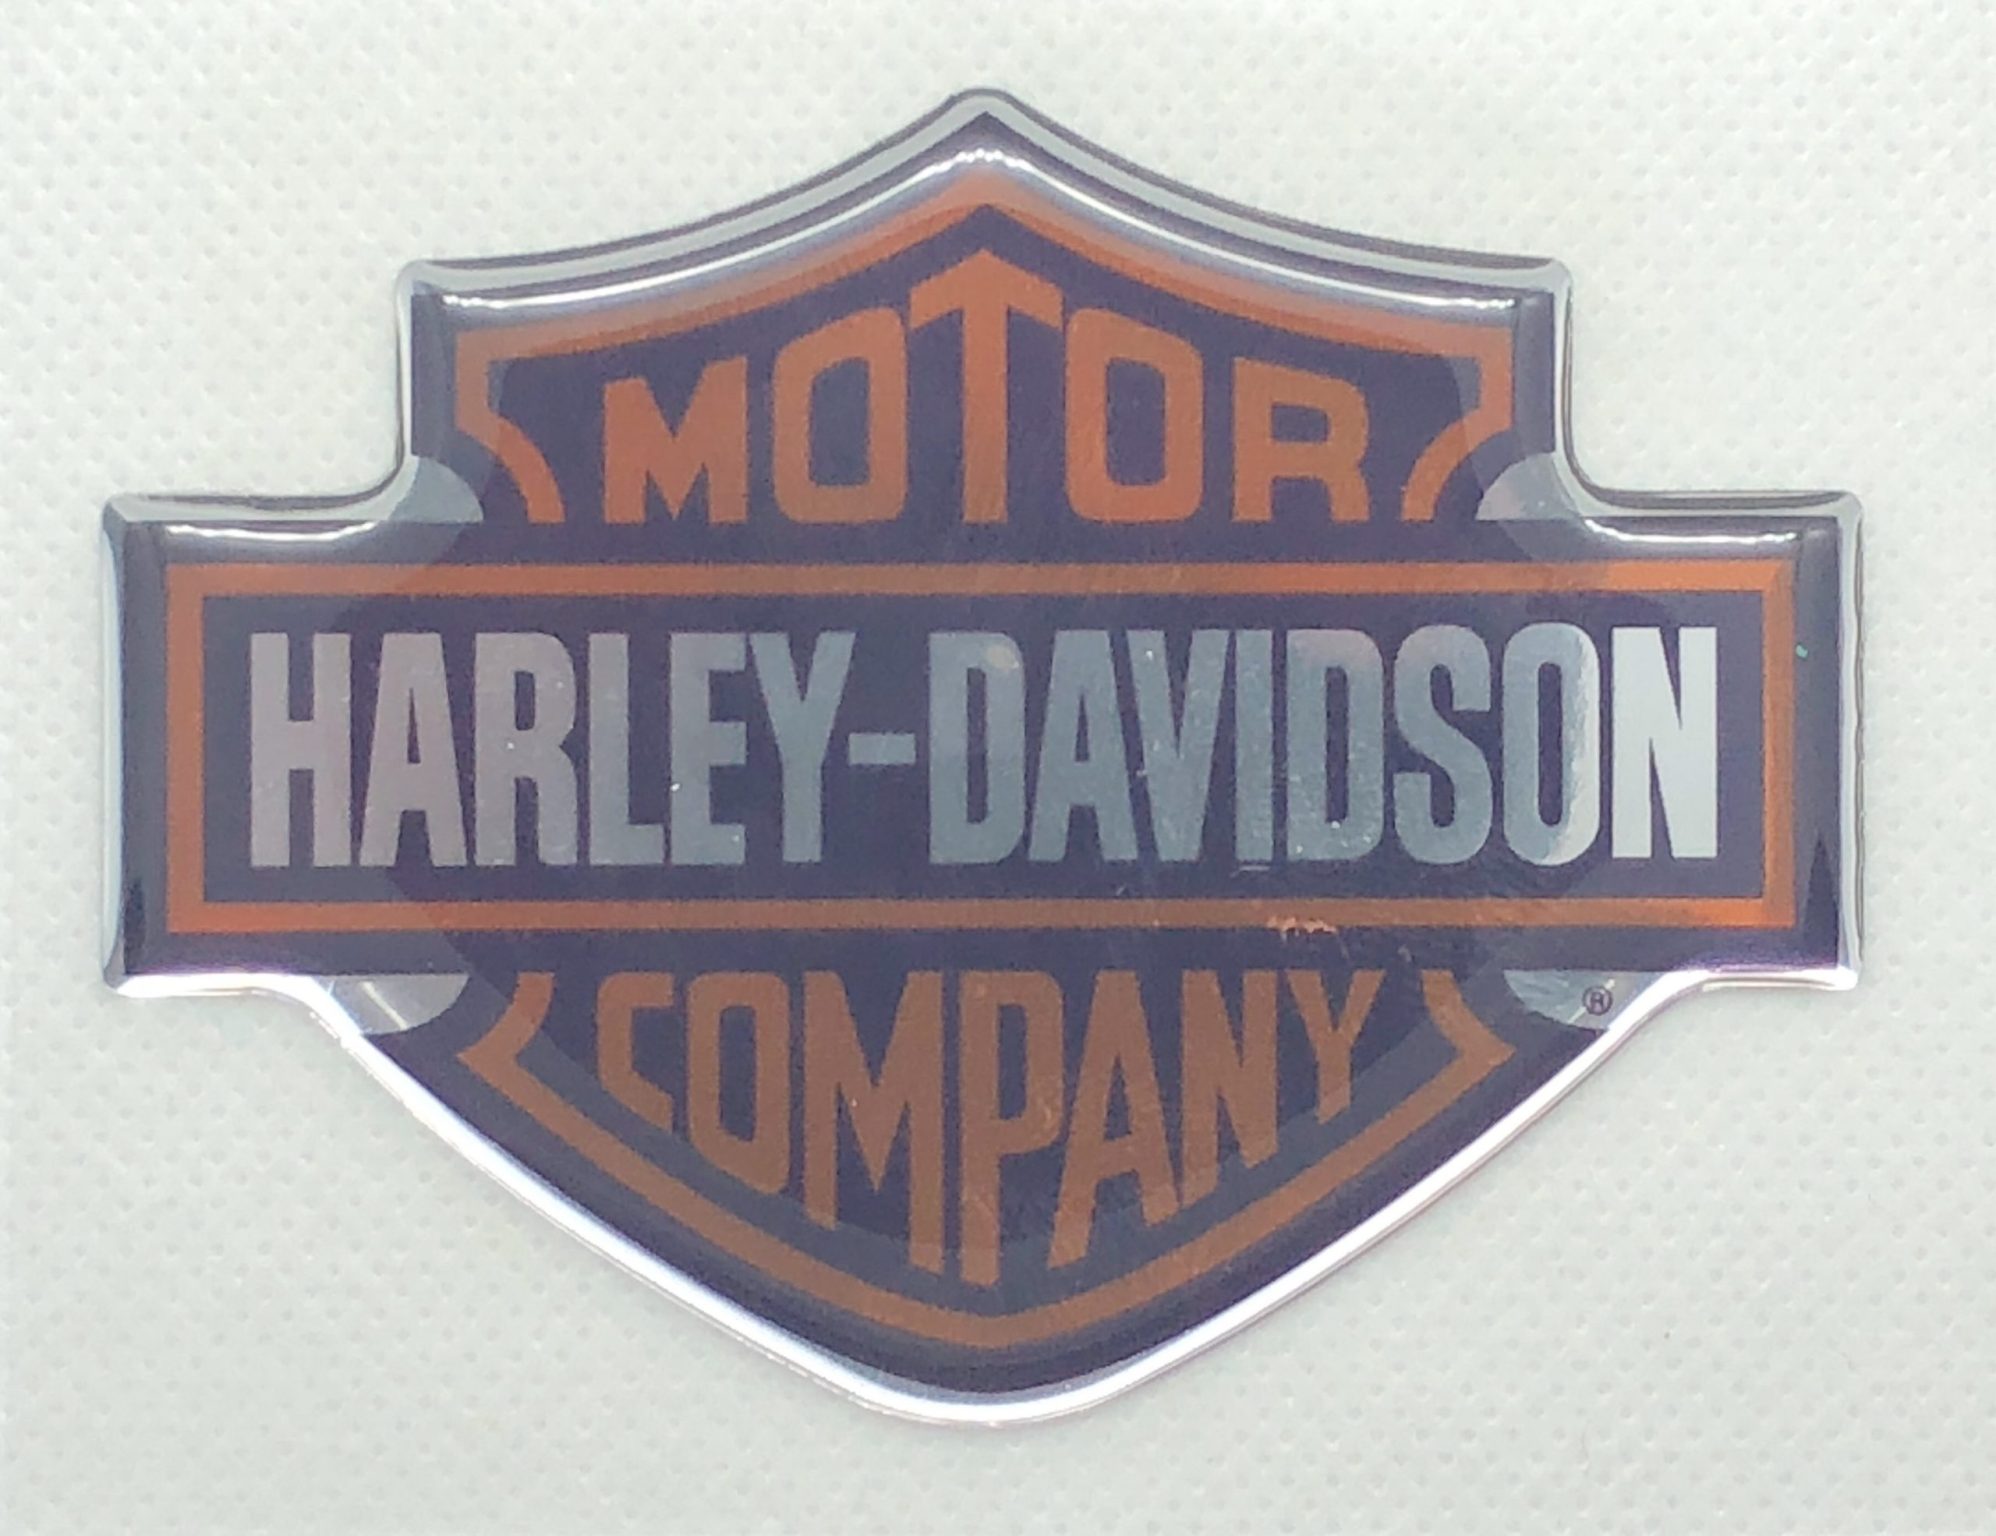 3D Harley Davidson logo (Silver orange)